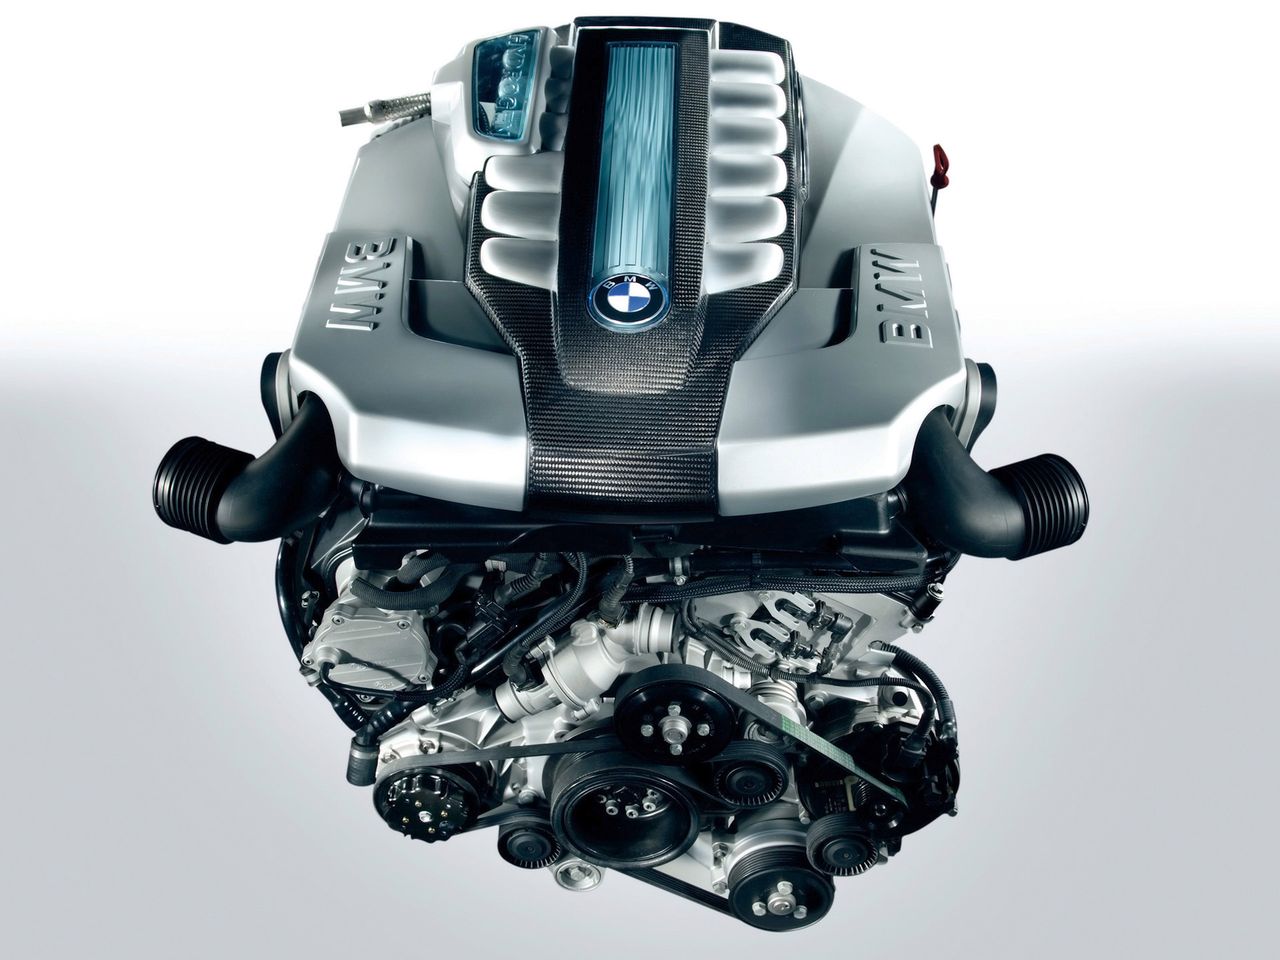 BMW Hydrogen